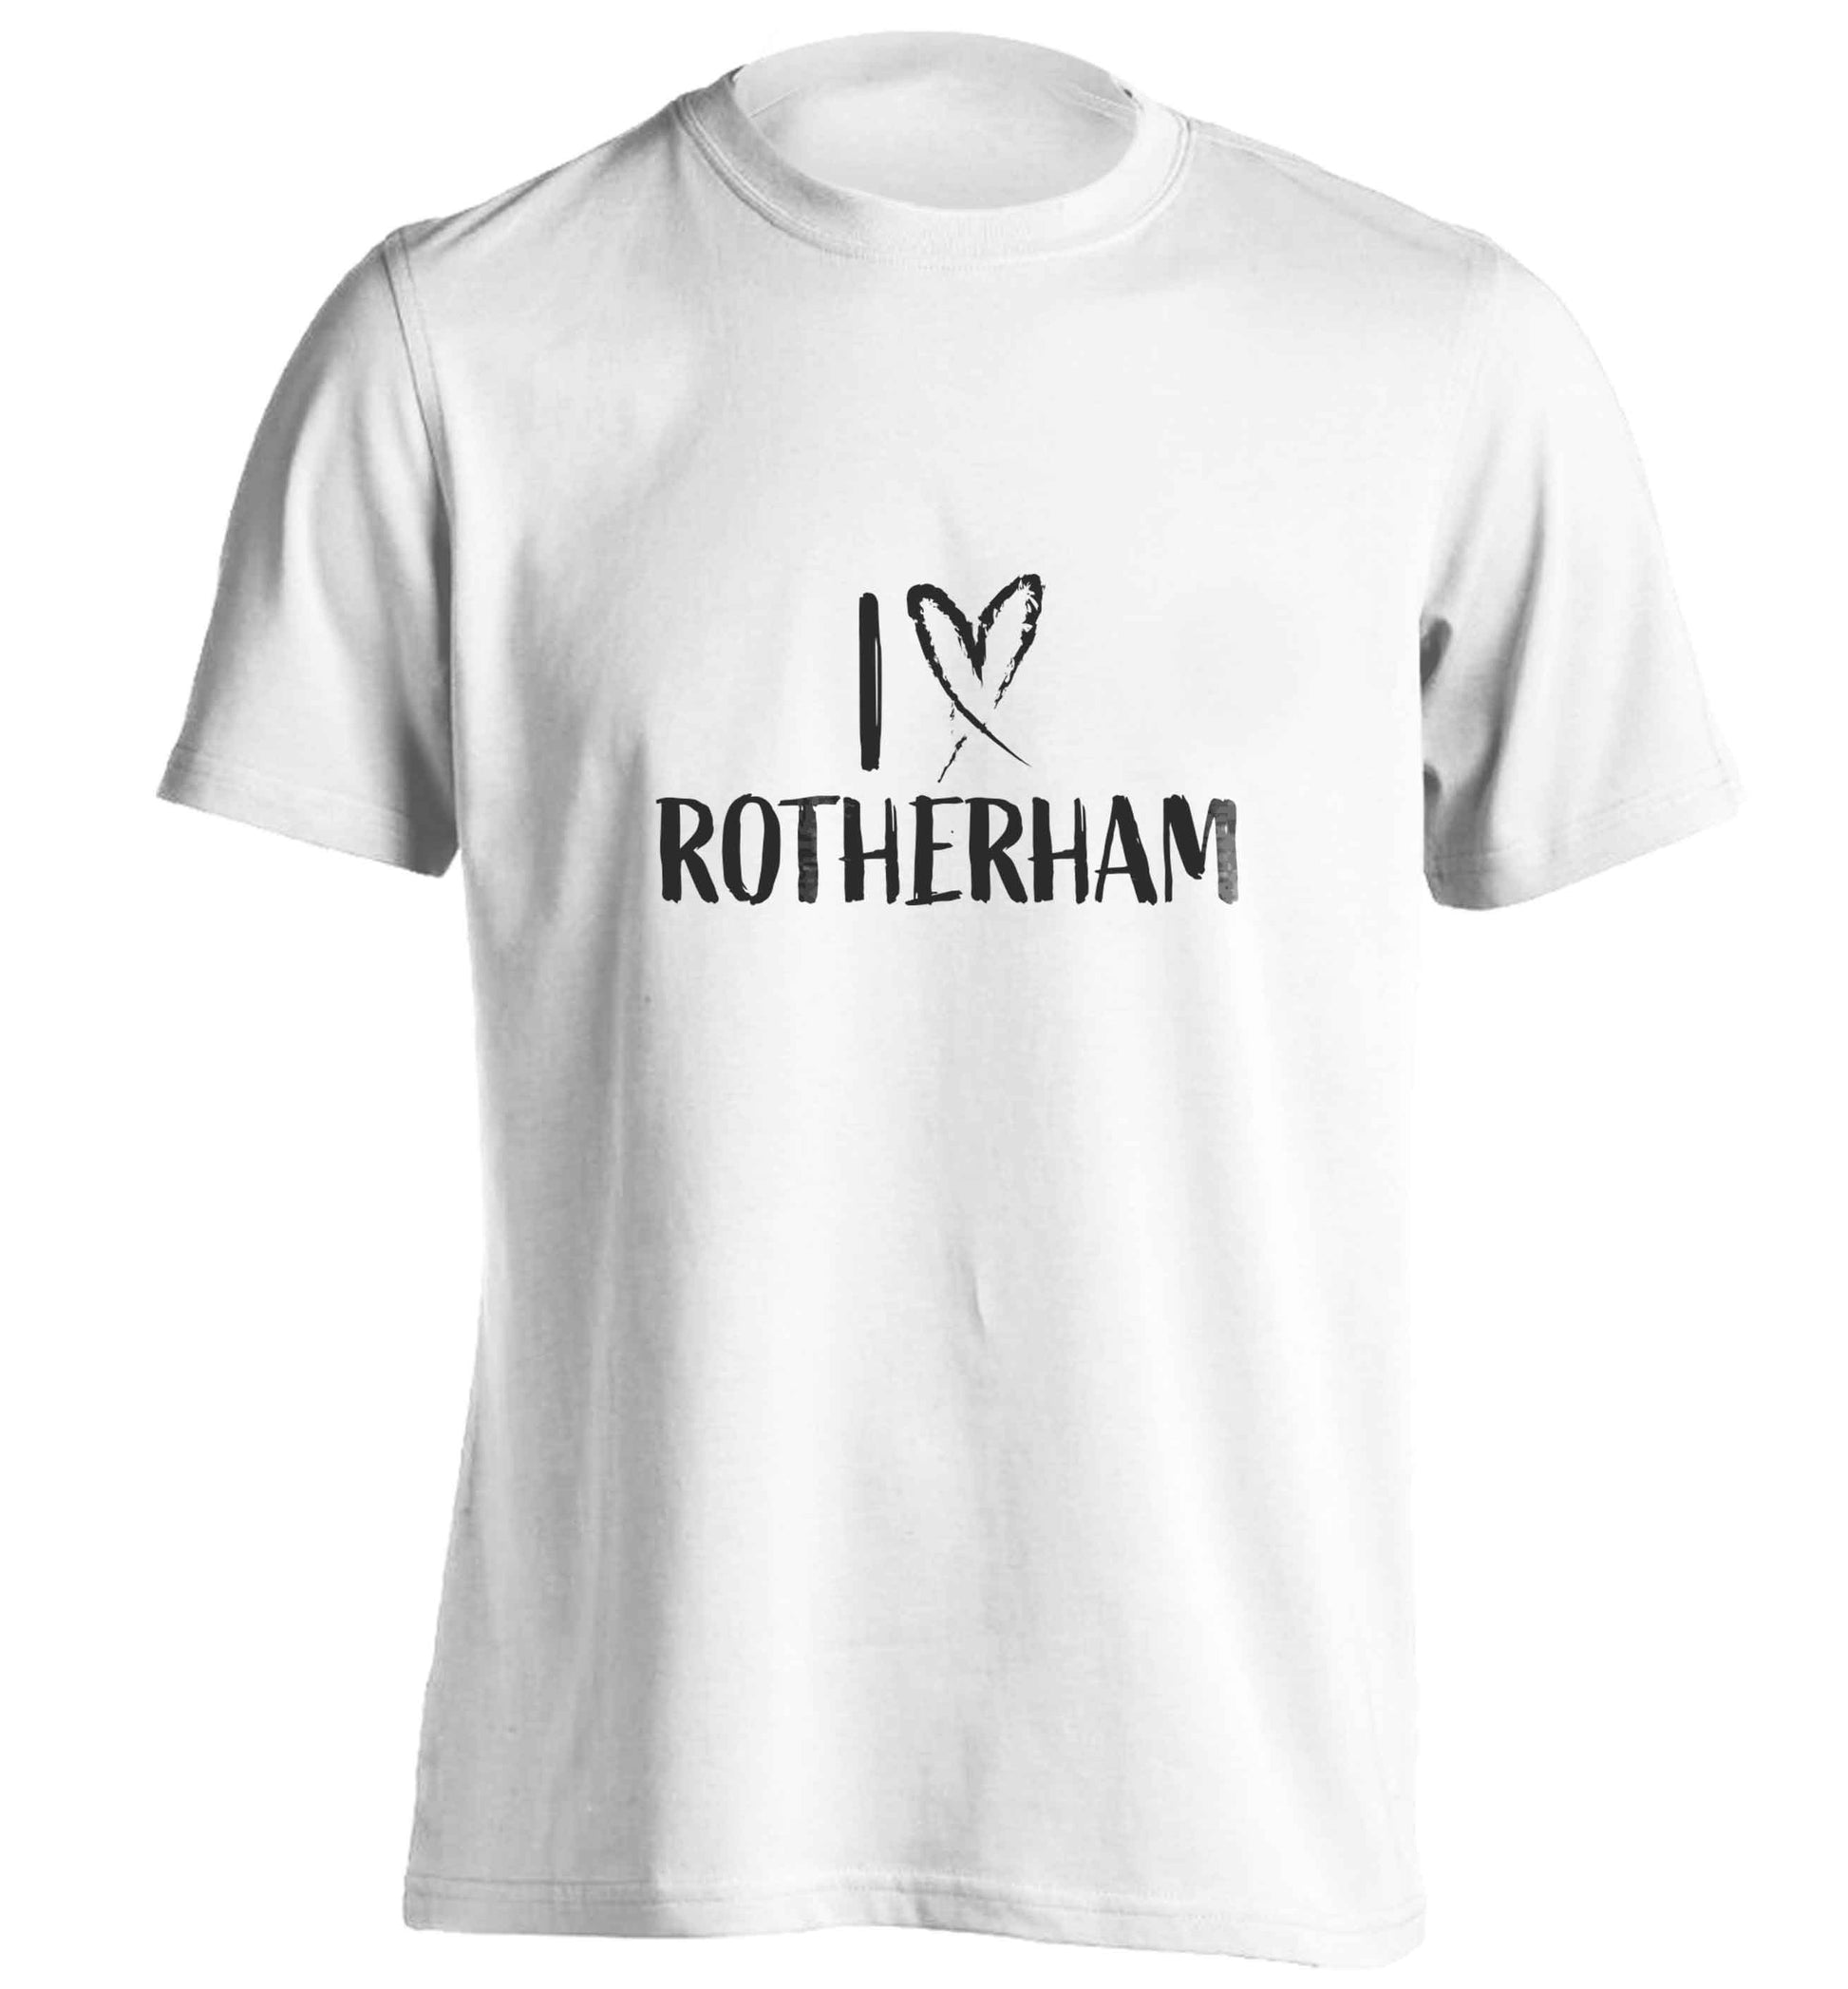 I love Rotherham adults unisex white Tshirt 2XL